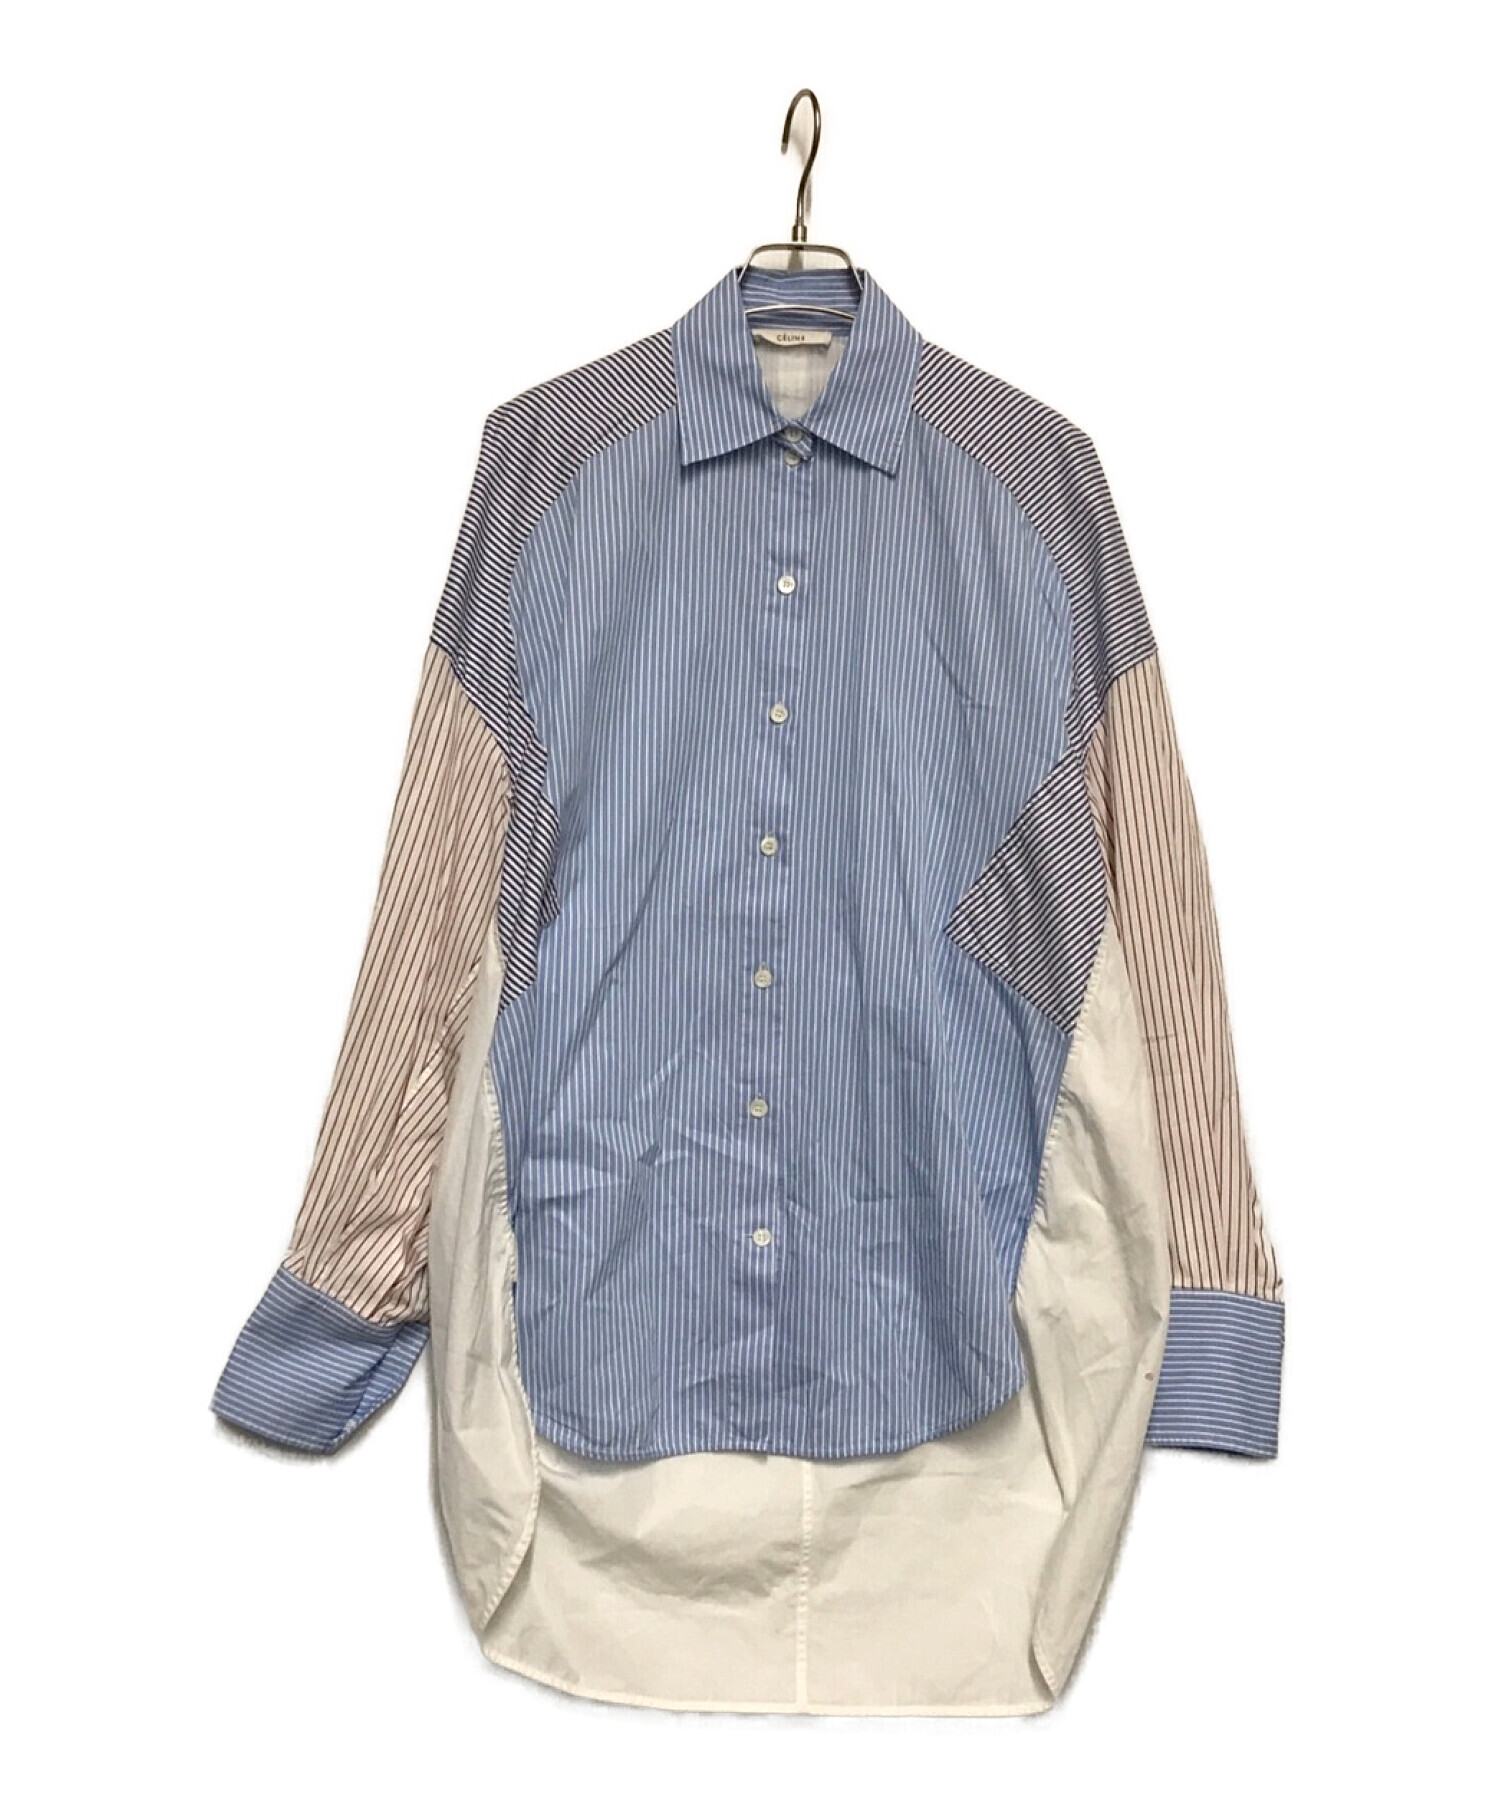 CELINE (セリーヌ) スイッチストライプオーバーシャツ ブルー サイズ:34